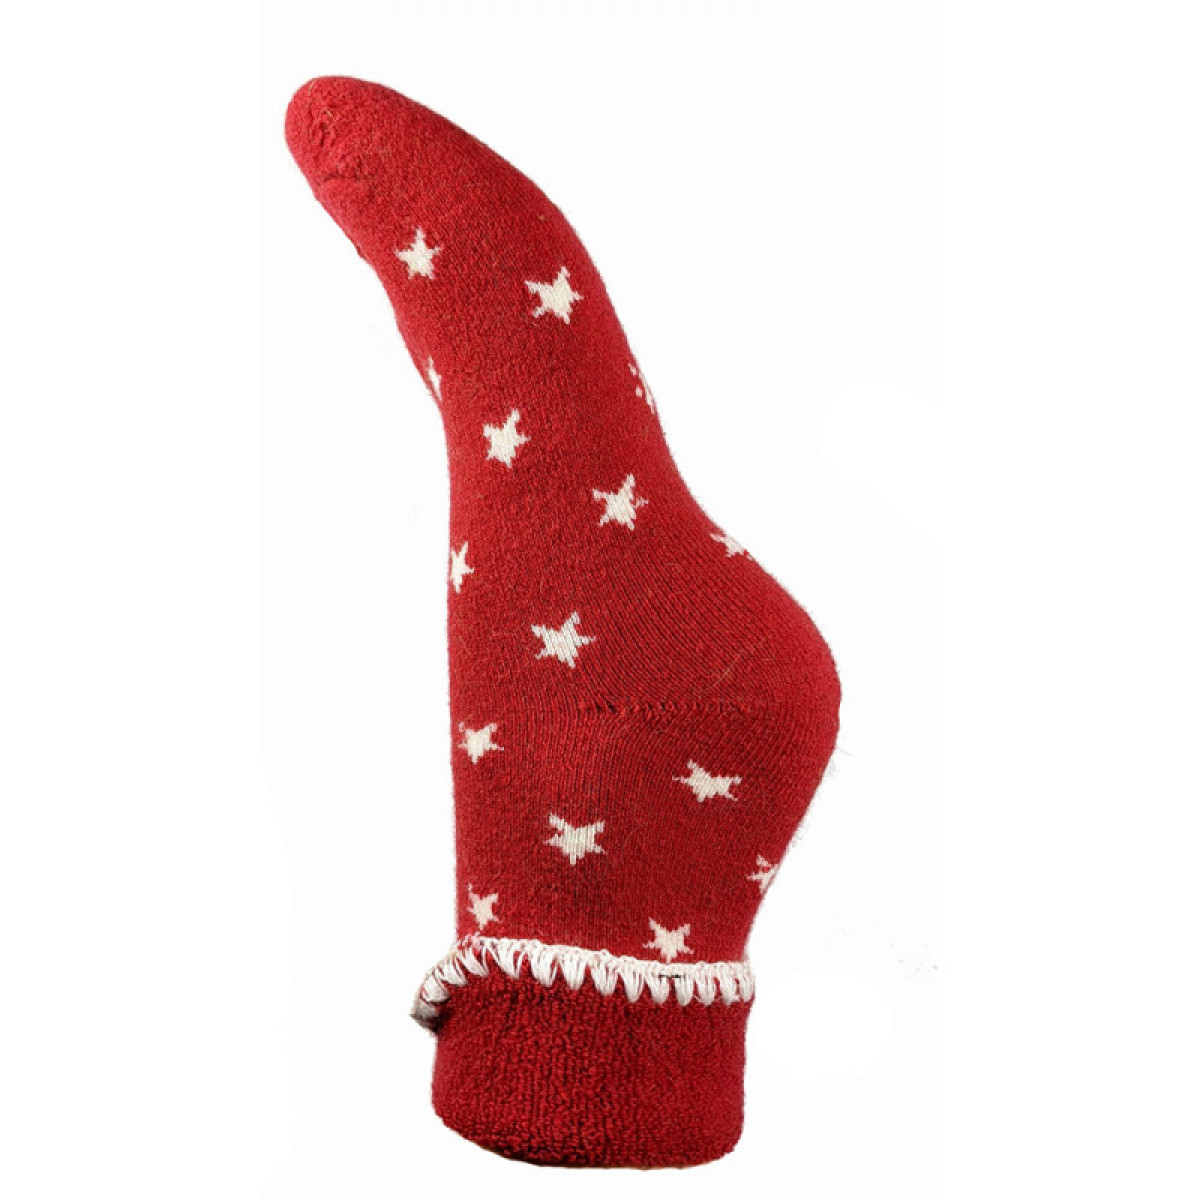 Joya Red with Cream Stars Cuff Socks